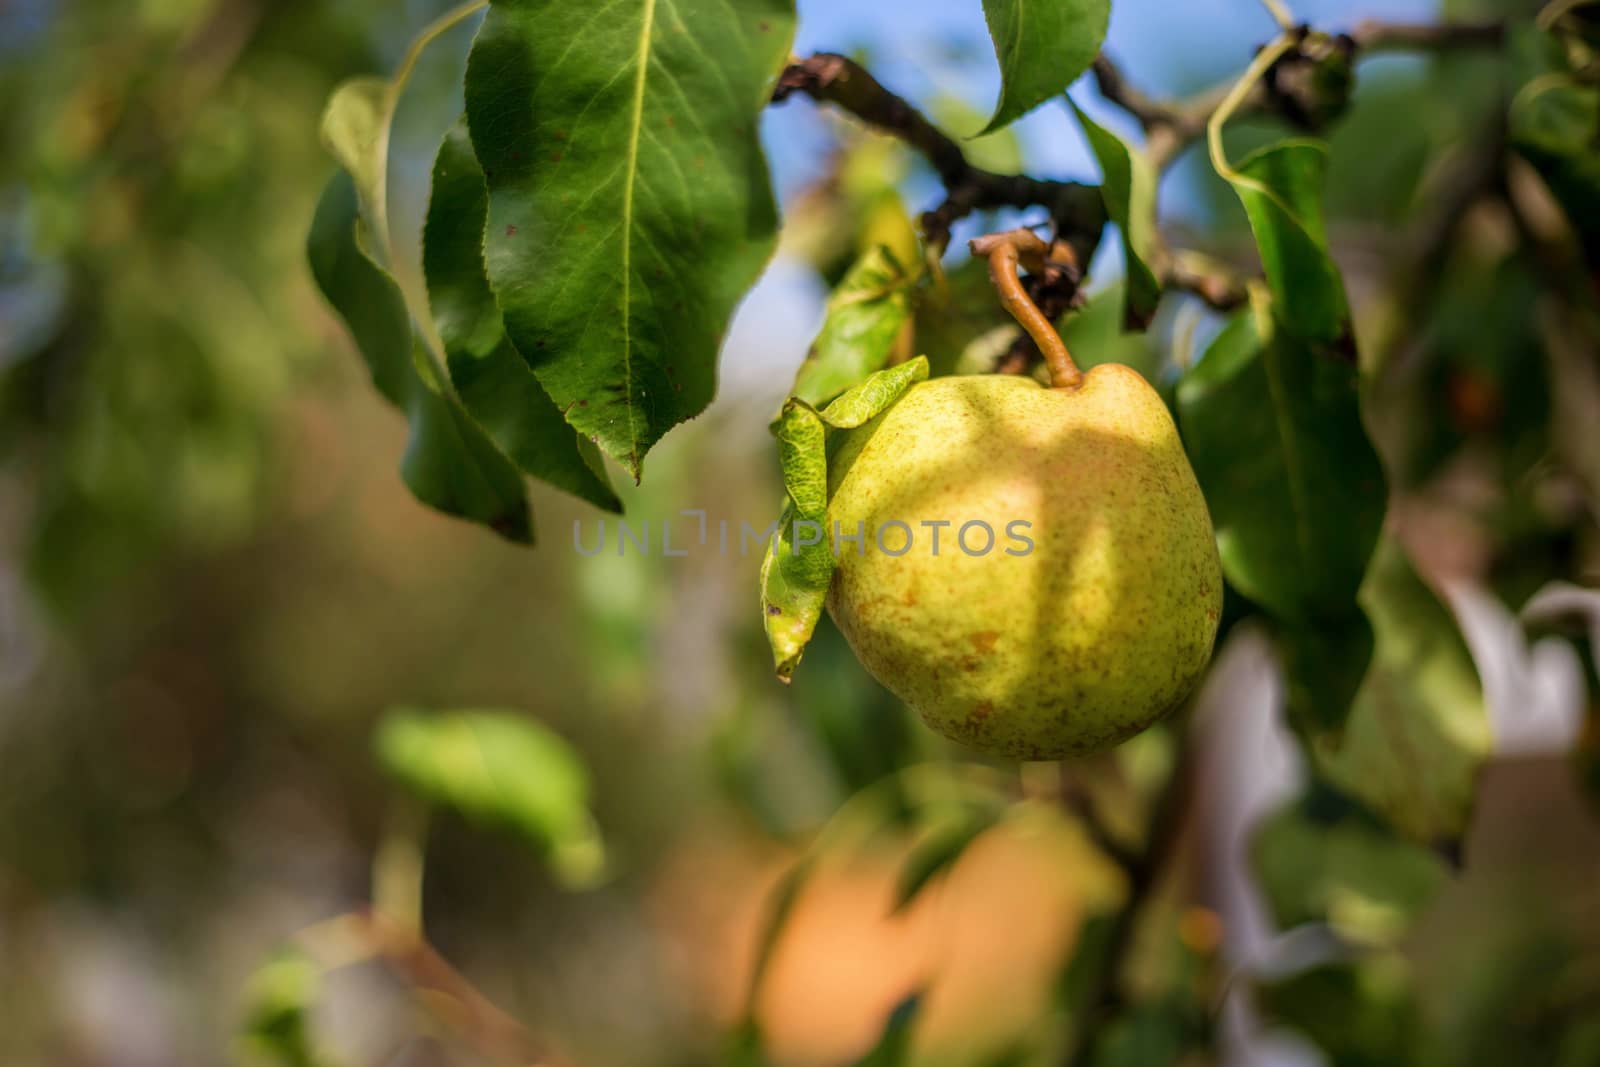 Ripe Pears on tree in fruit garden by galinasharapova